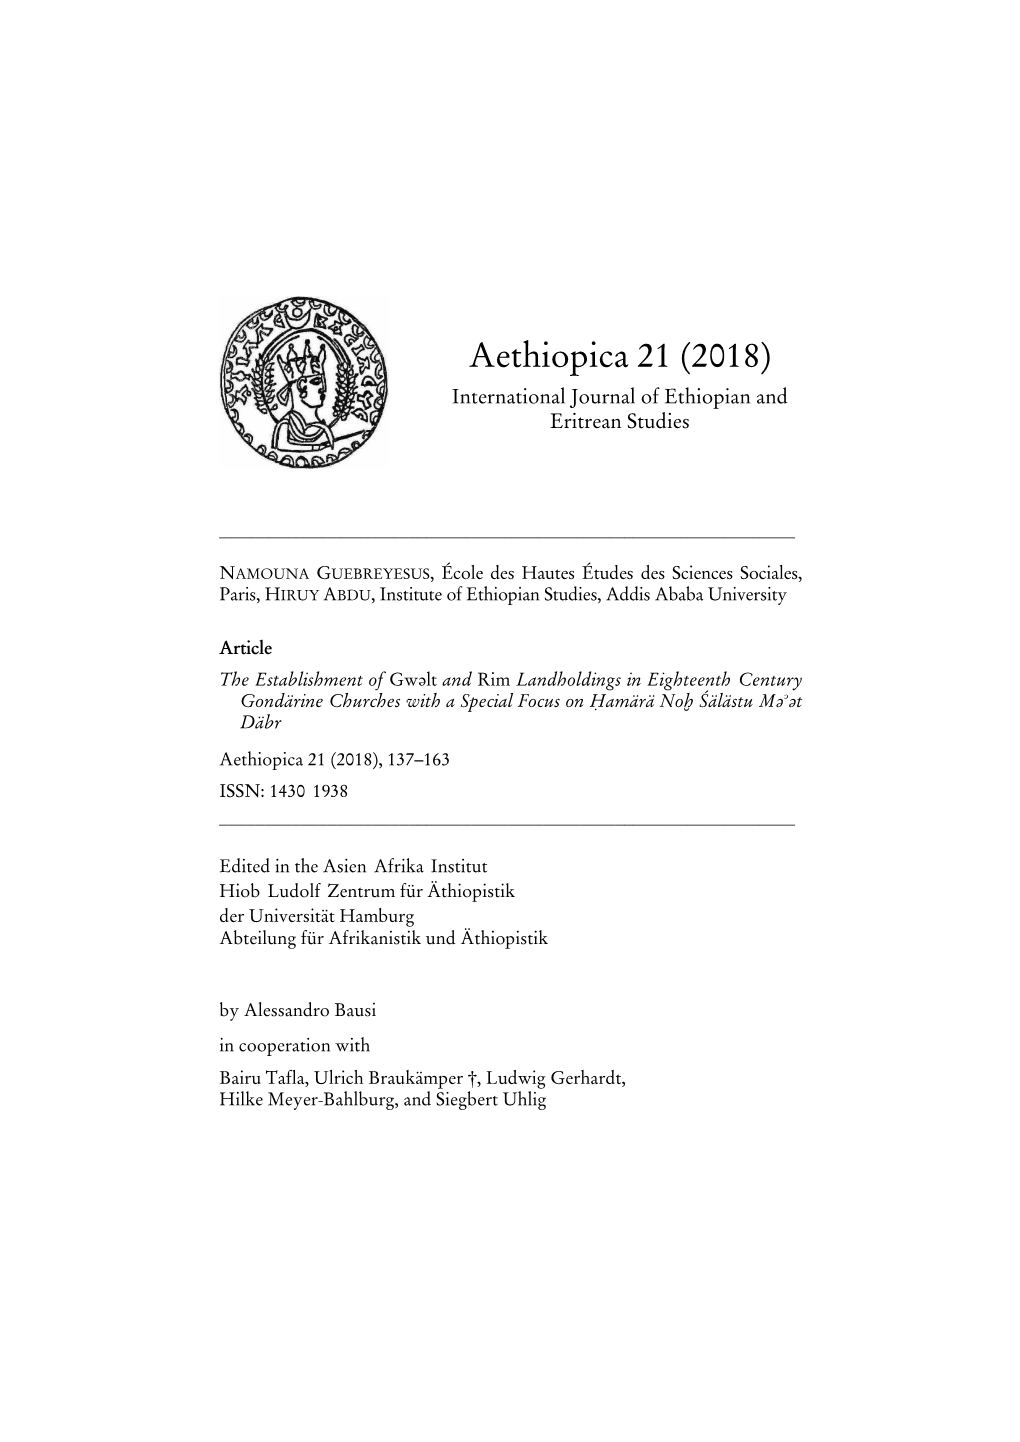 Aethiopica 21 (2018) International Journal of Ethiopian and Eritrean Studies